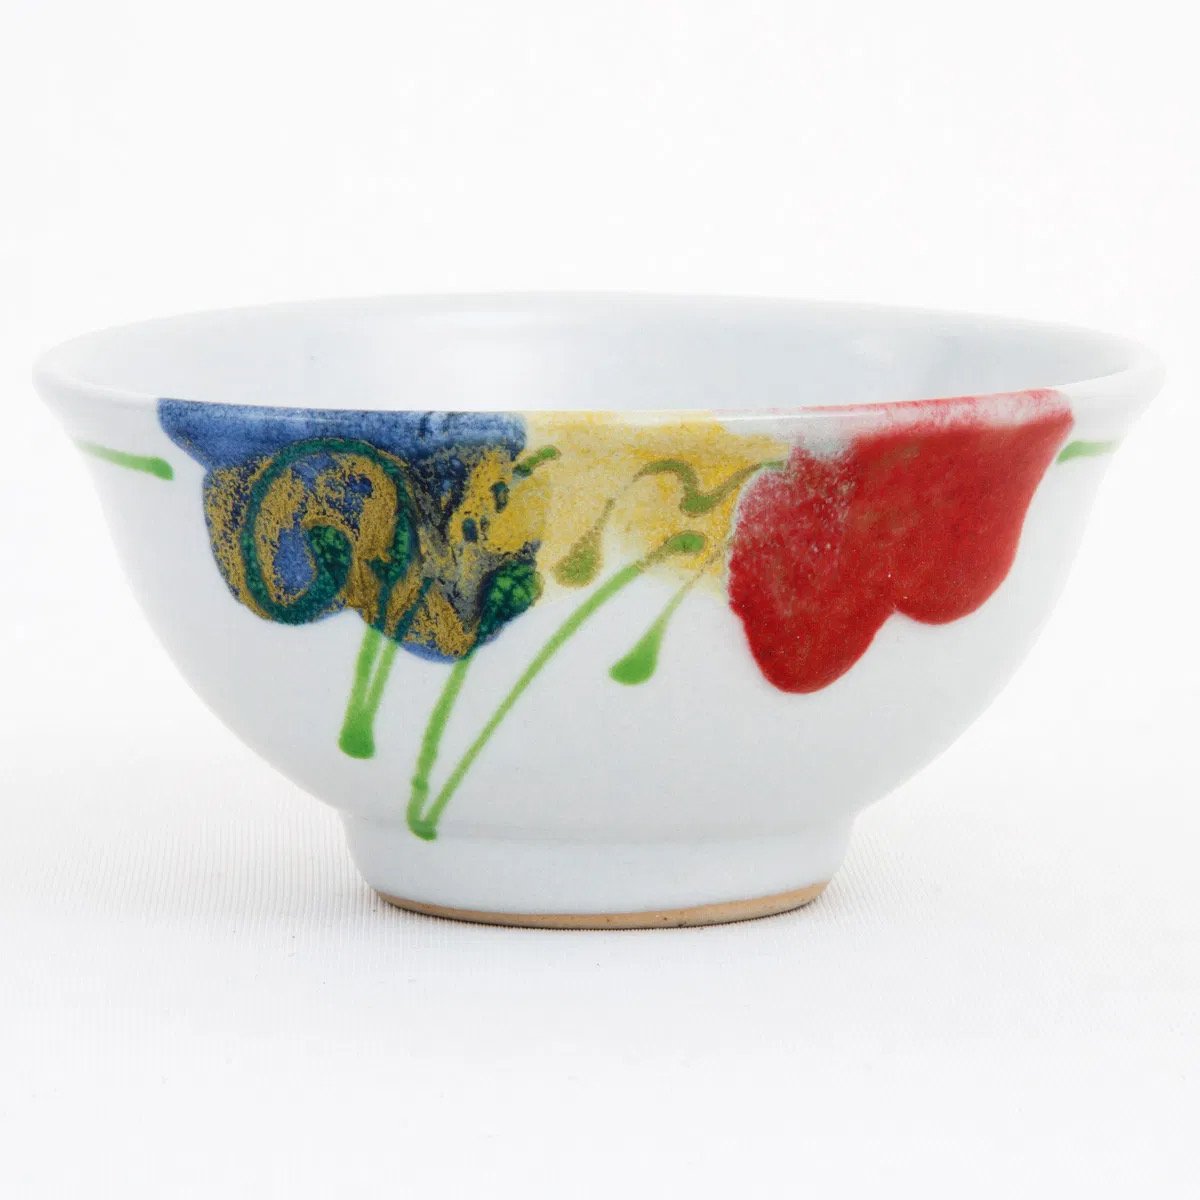 Medium Poppy Bowl - The Nancy Smillie Shop - Art, Jewellery & Designer Gifts Glasgow